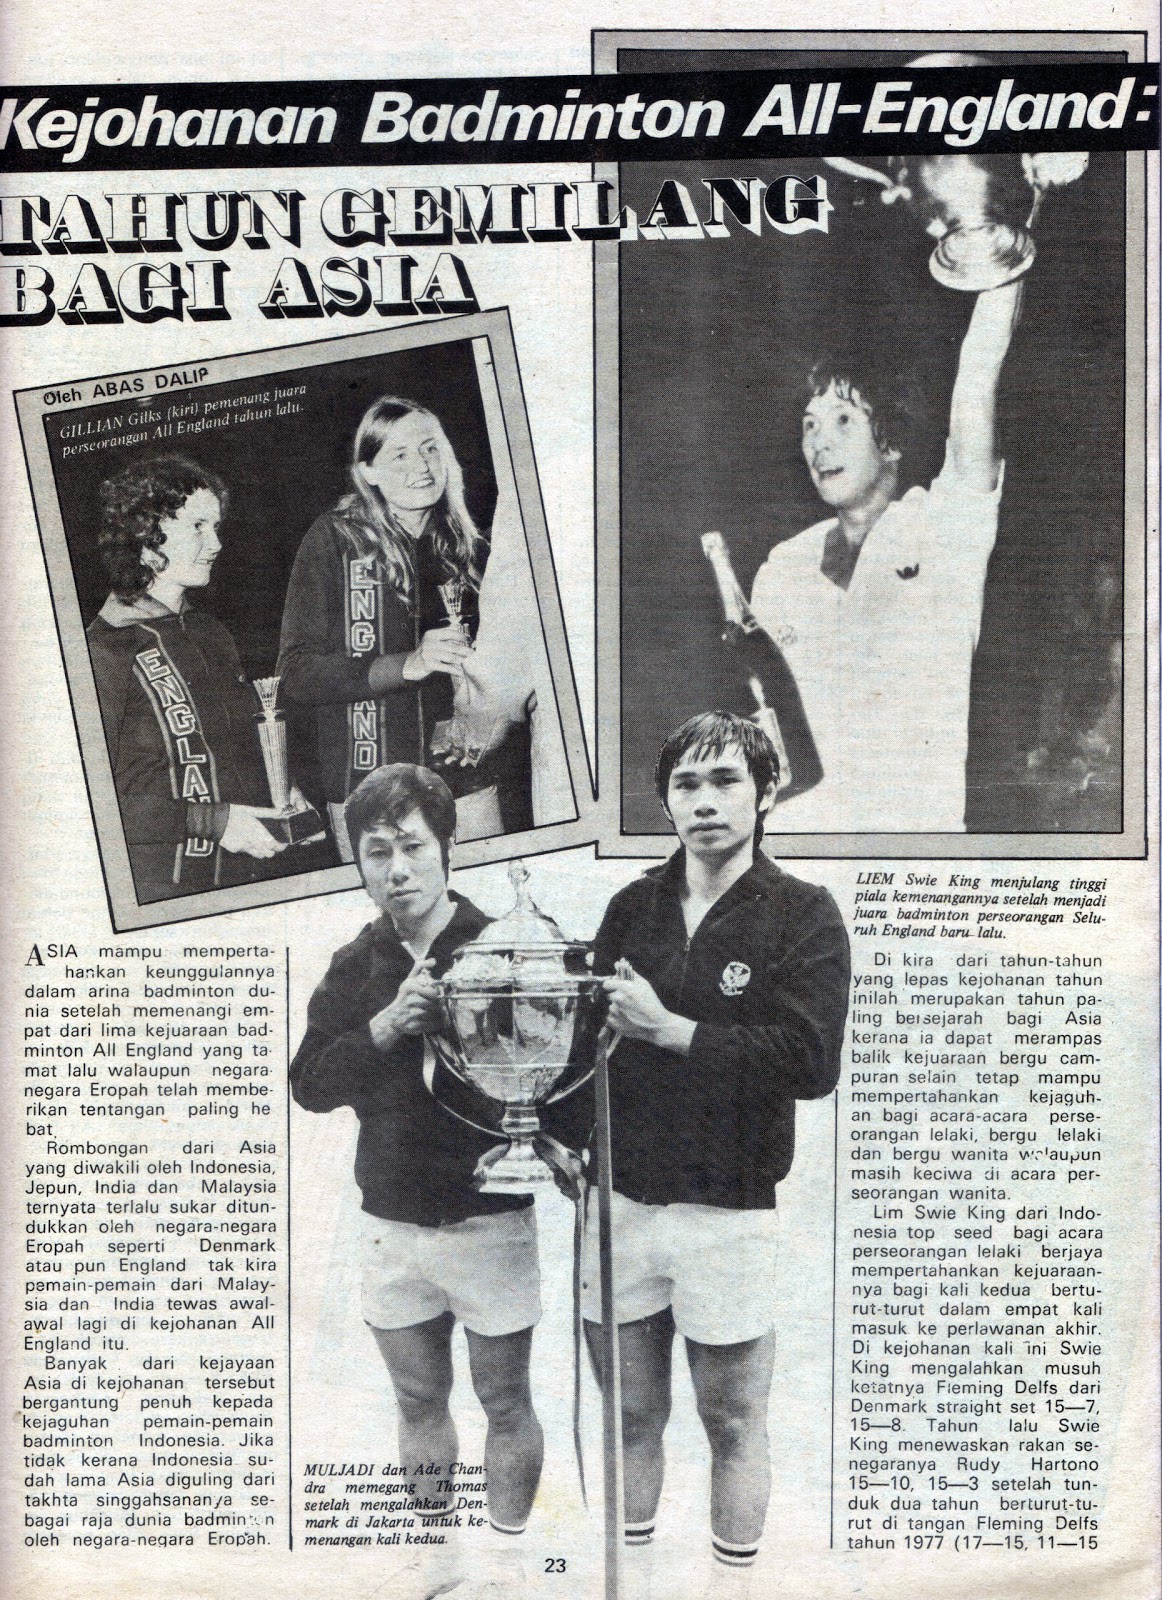 MynahBirds Badminton Archives Blog 1979 All England Badminton Report